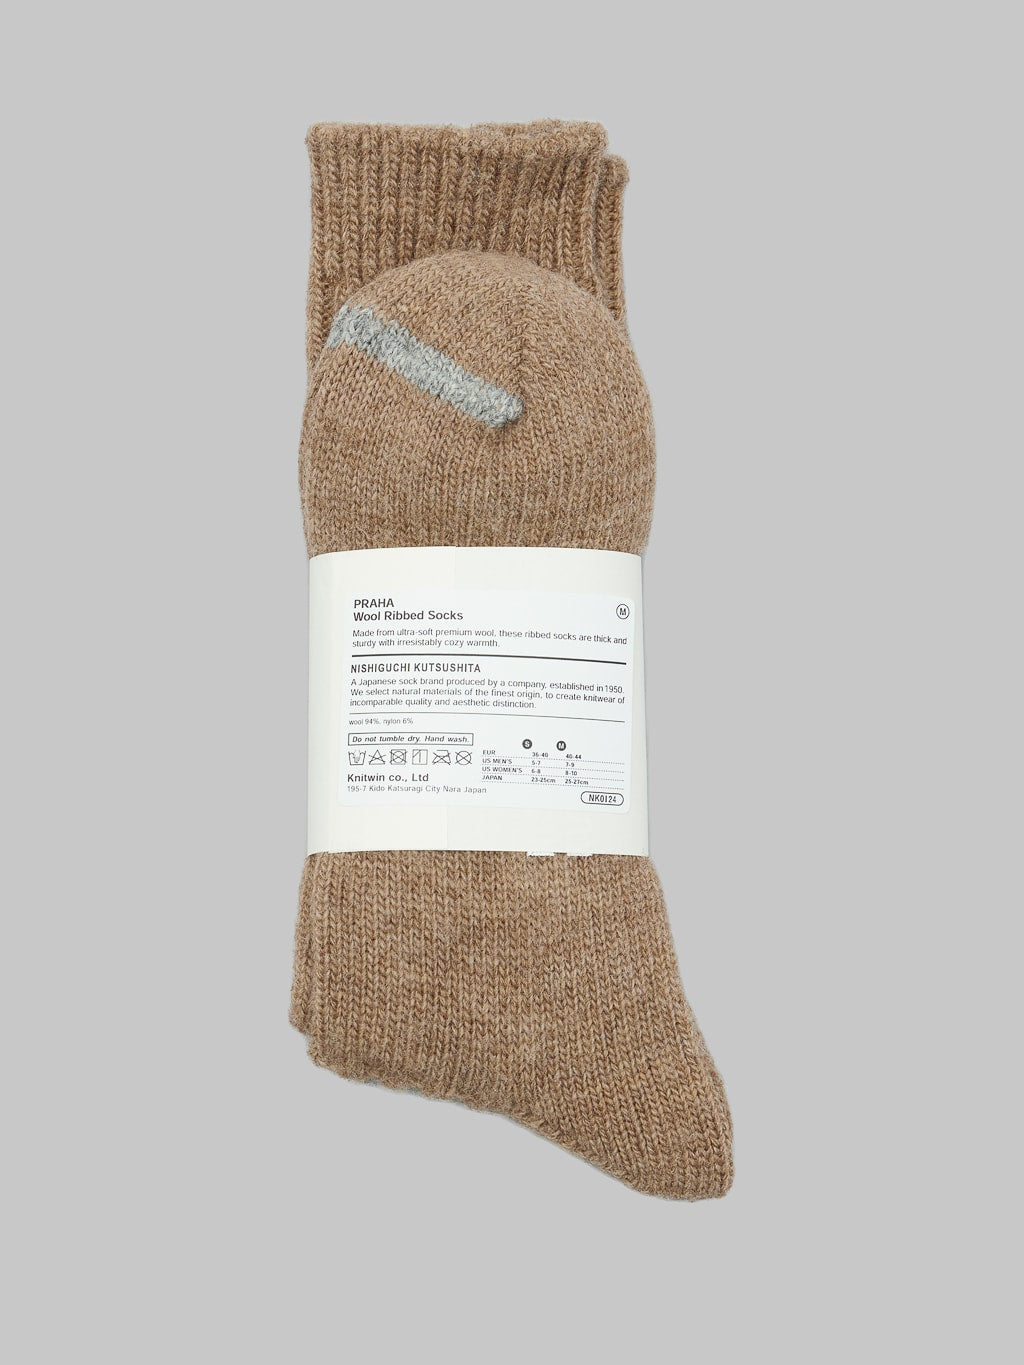 nishiguchi kutsushita praha wool ribbed socks beige back label